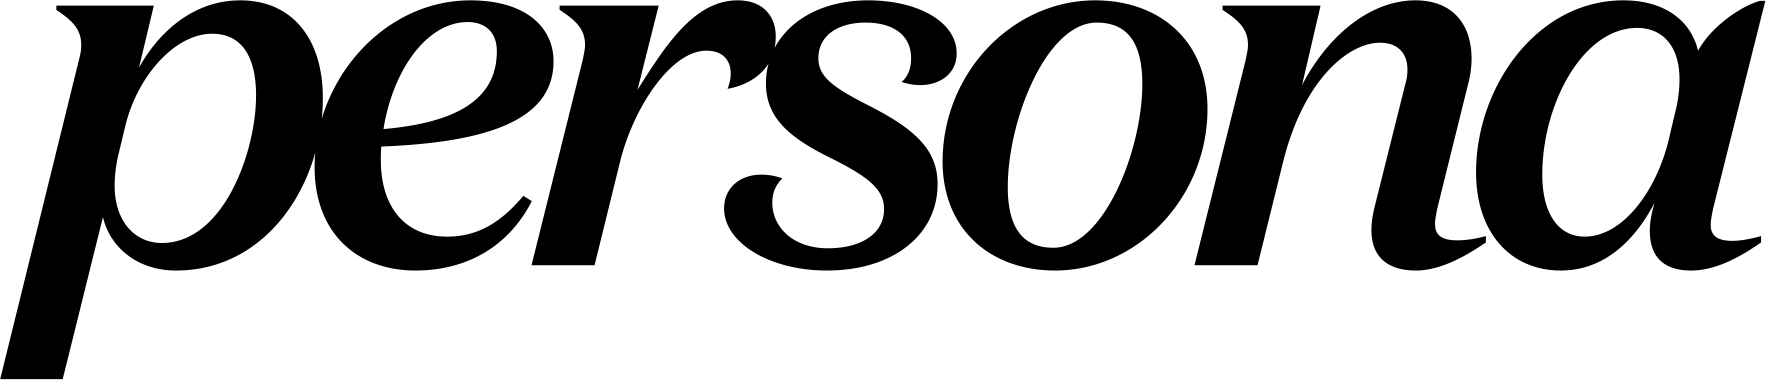 Logo Cliente Persona